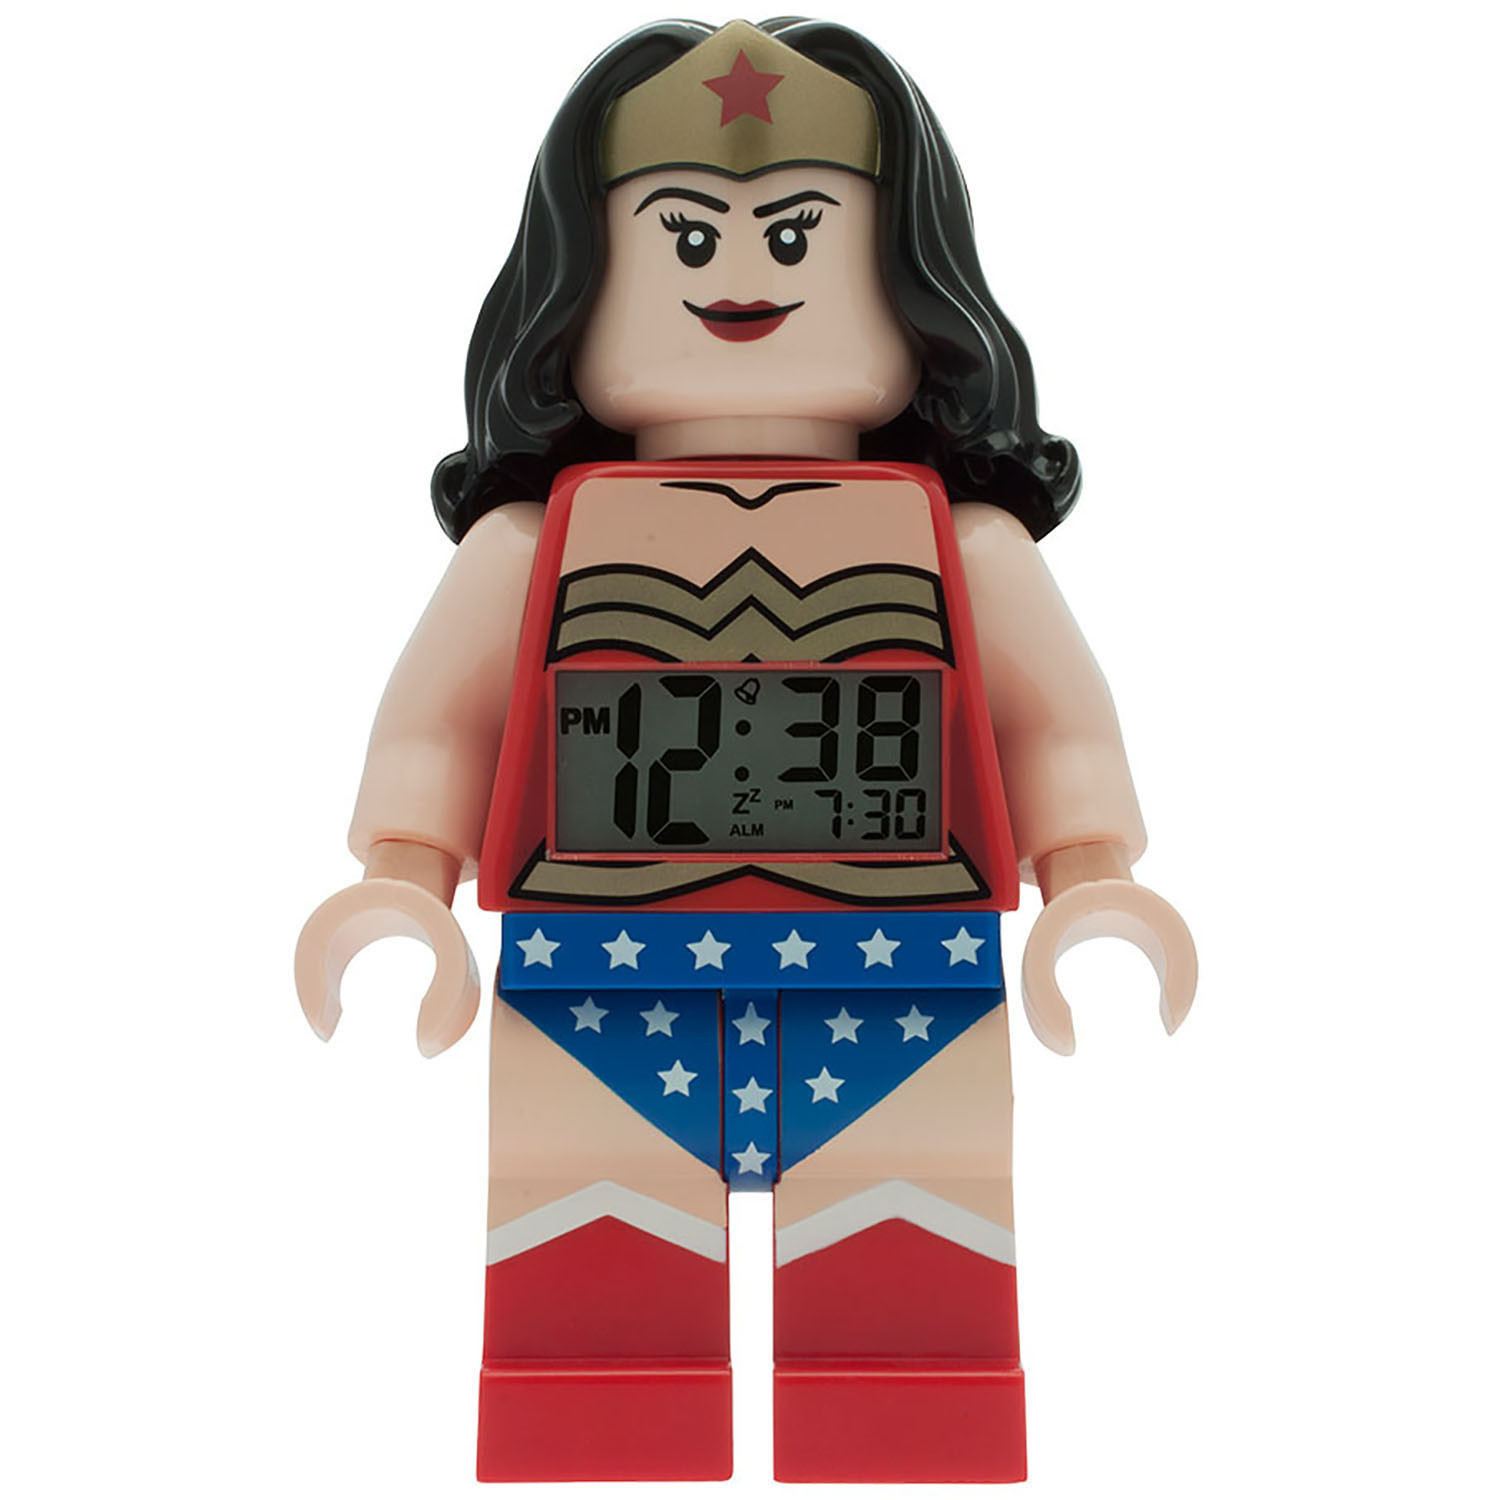 Réveil Lego Wonder Woman
DC Comics Super Heroes